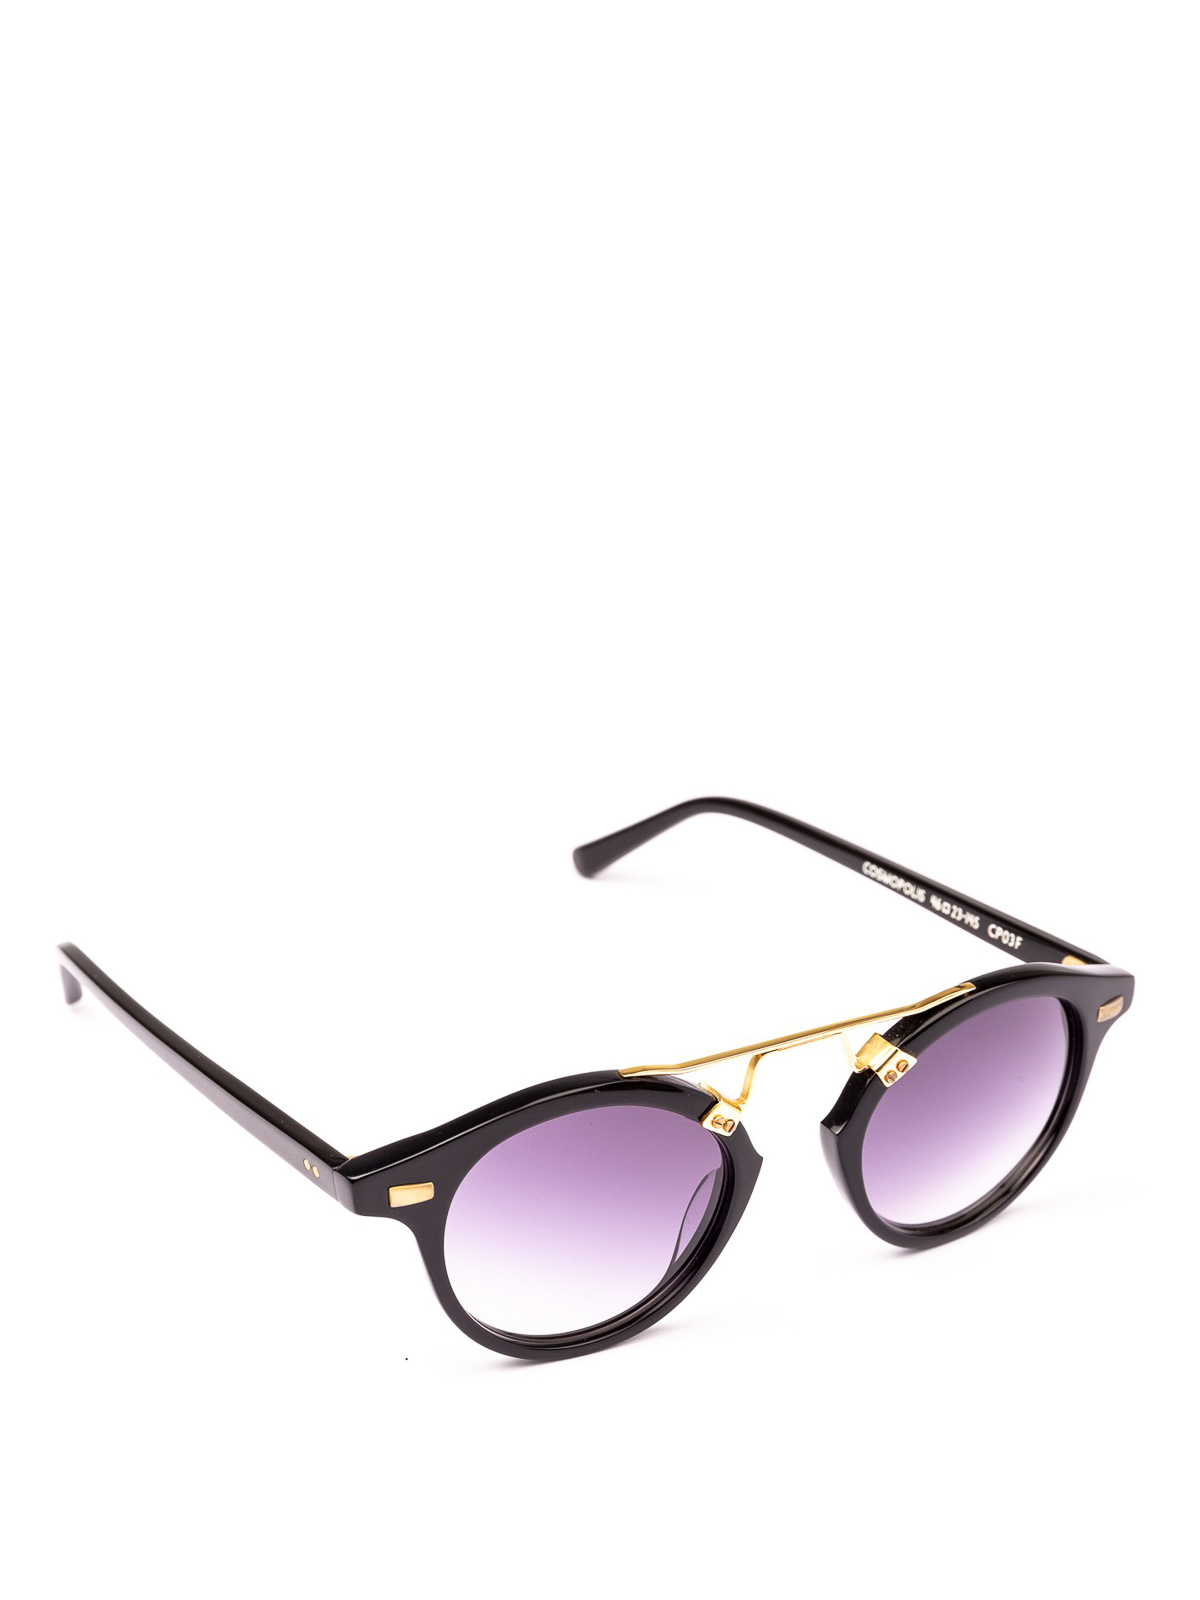 Sunglasses - Cosmopolis gradient lens black sunglasses - COSMOPOLISCP03F